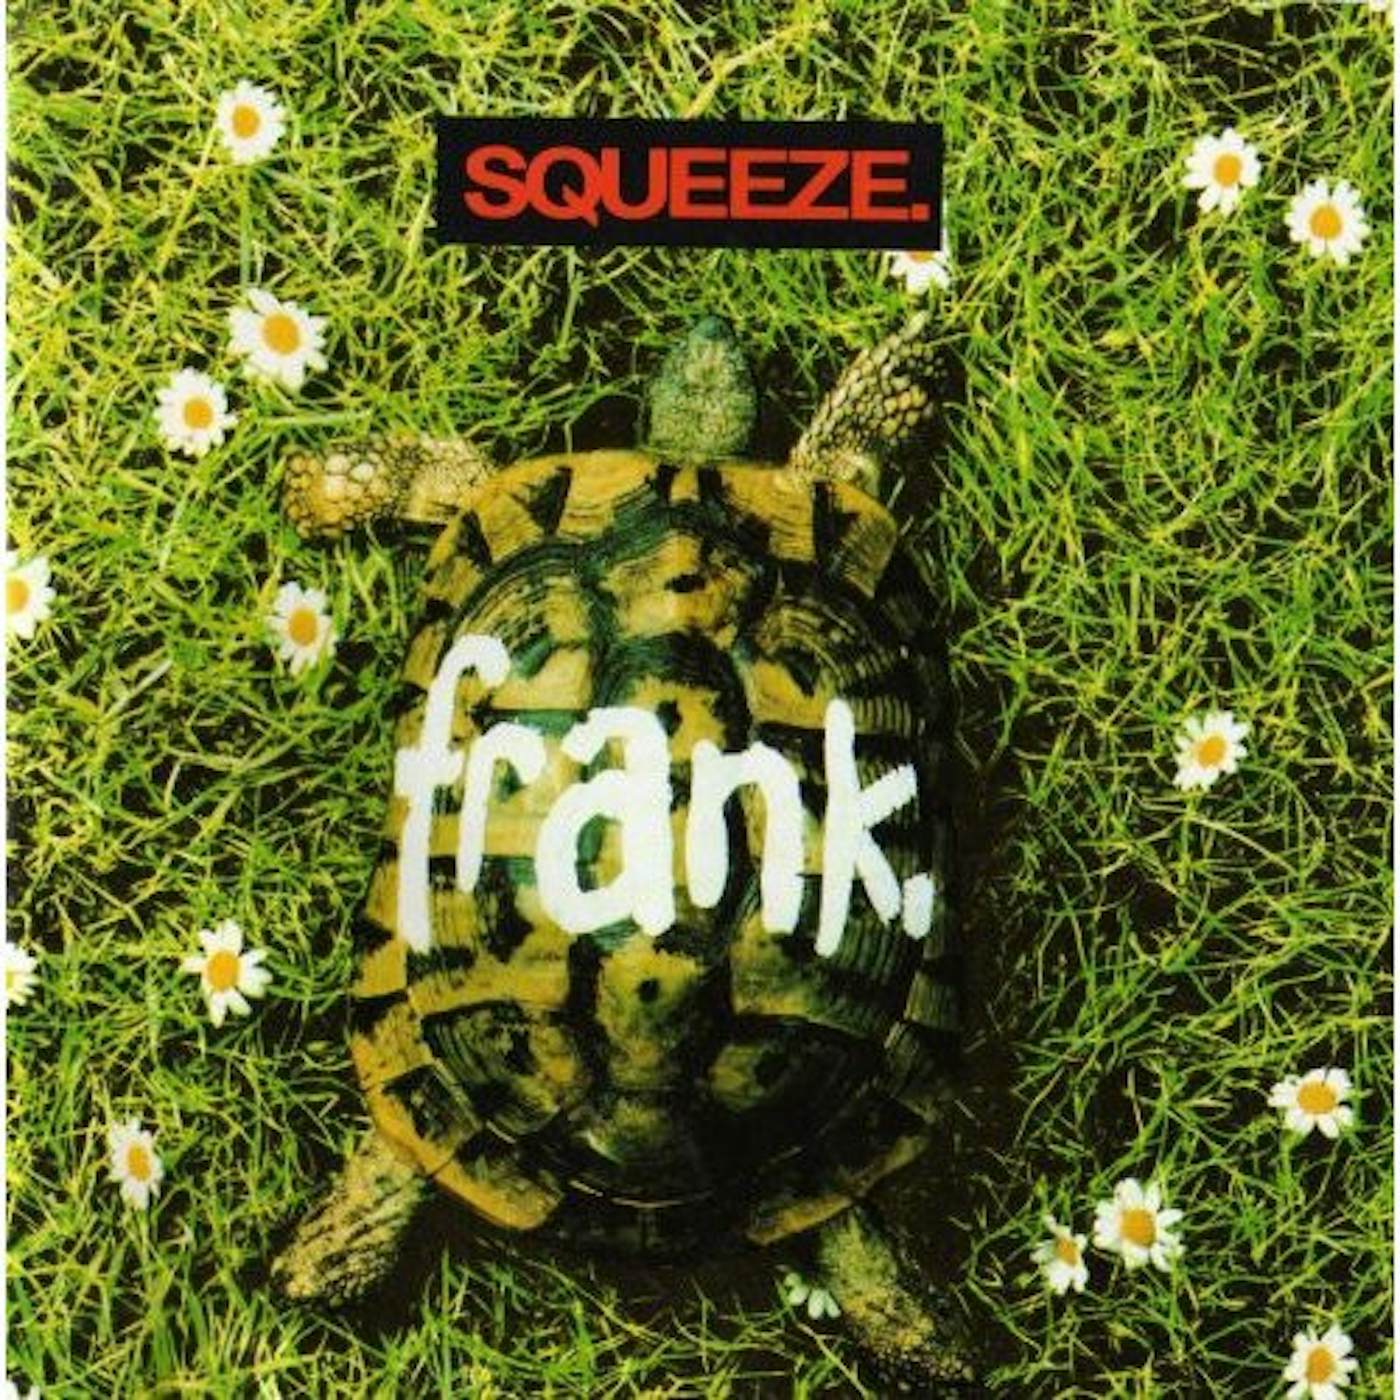 Squeeze Frank Vinyl Record